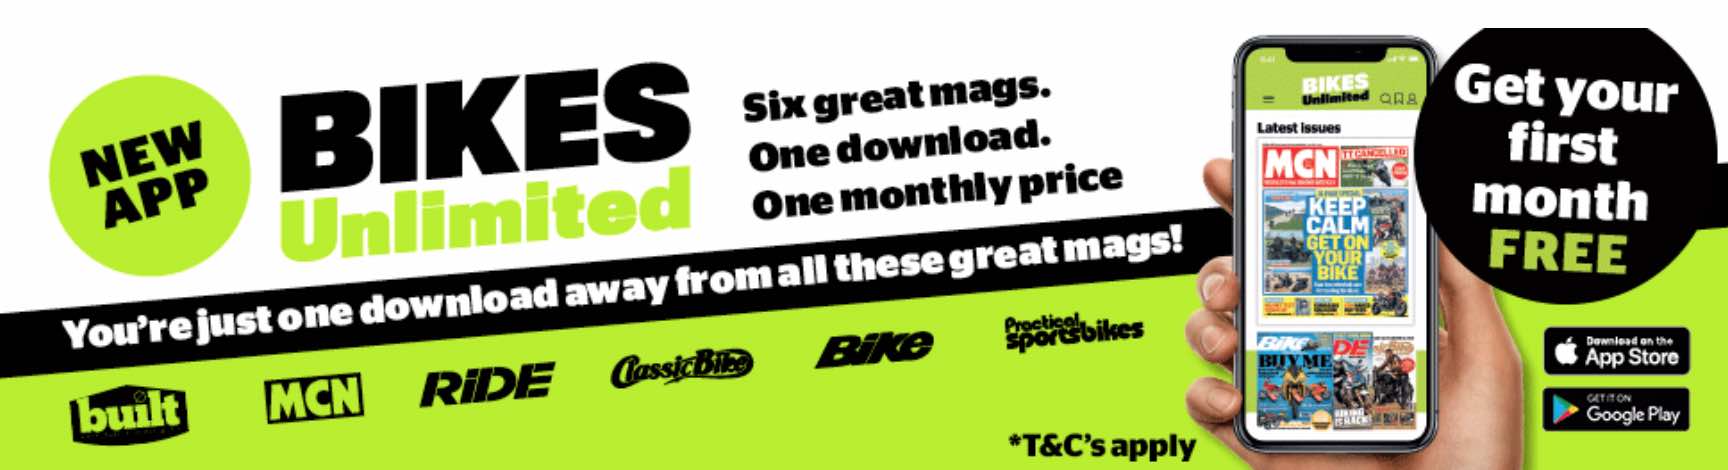 Bikes unlimited banner advertising screenshot